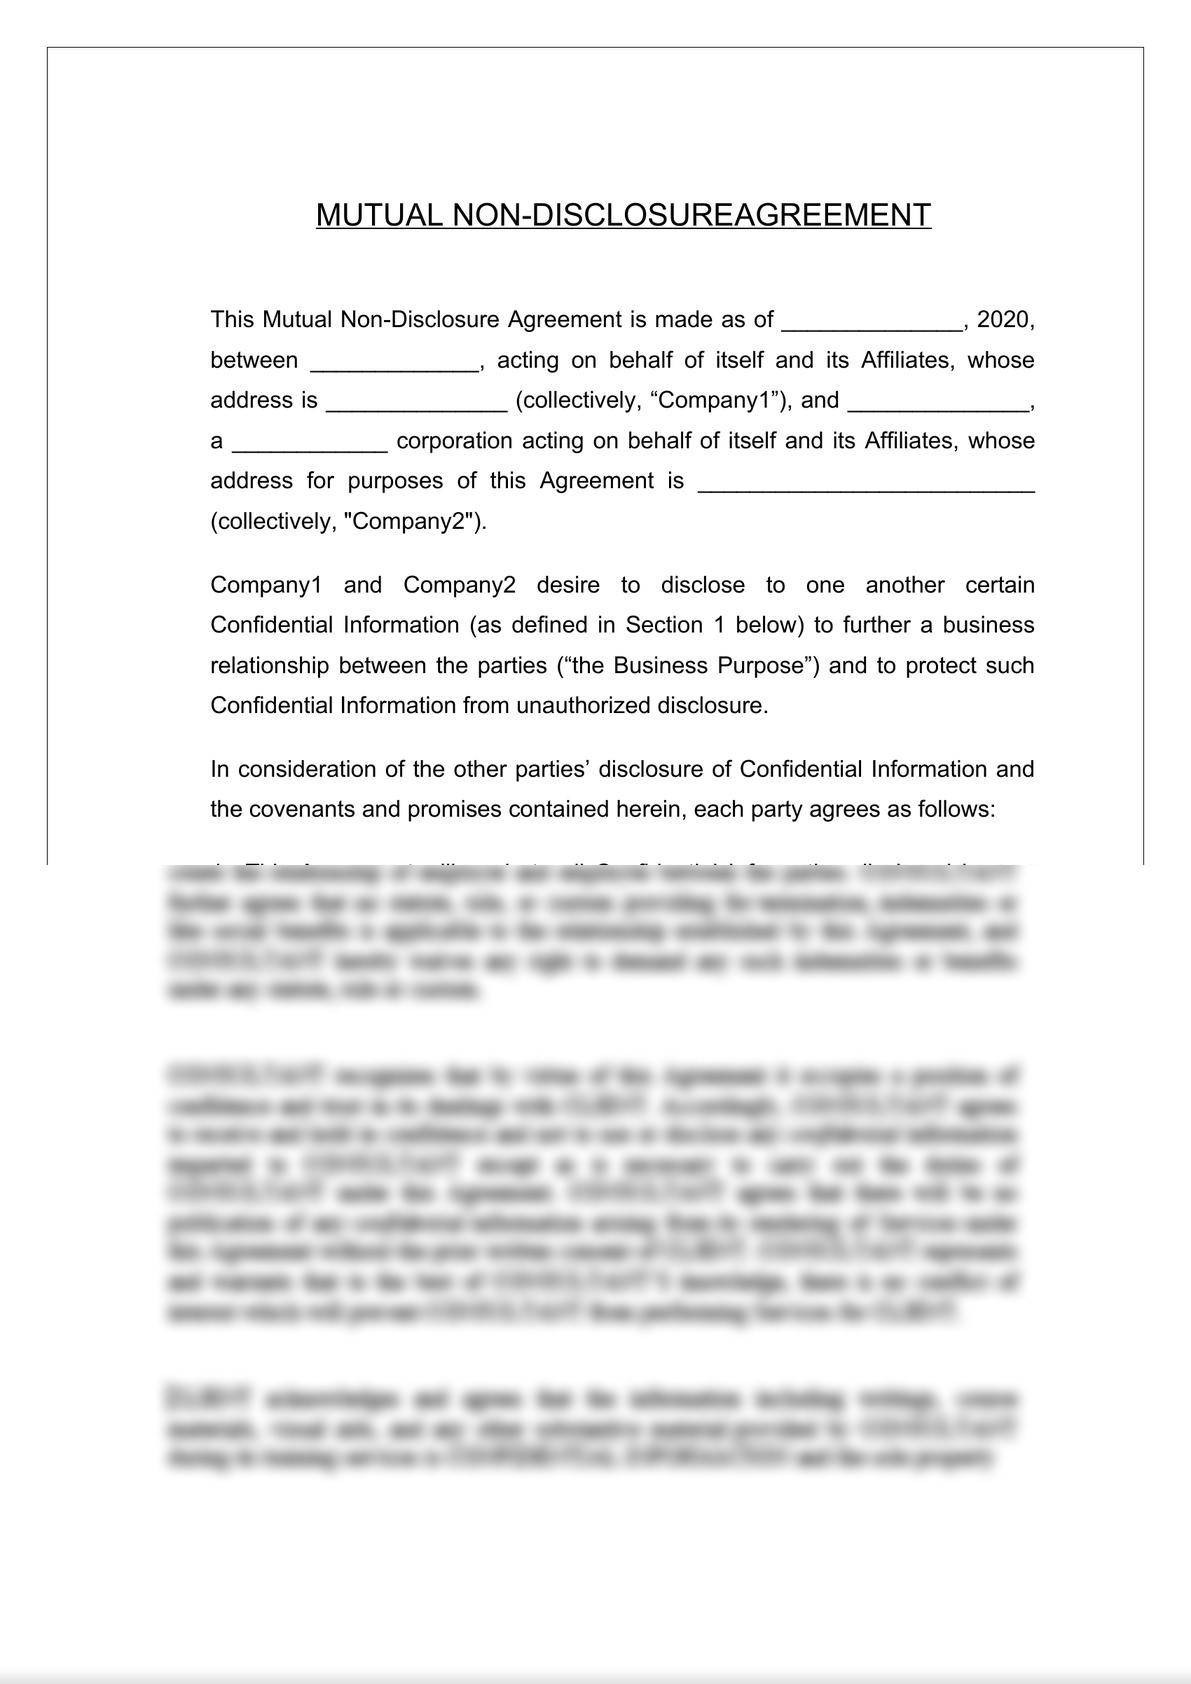 Mutual Non-Disclosure Agreement-1